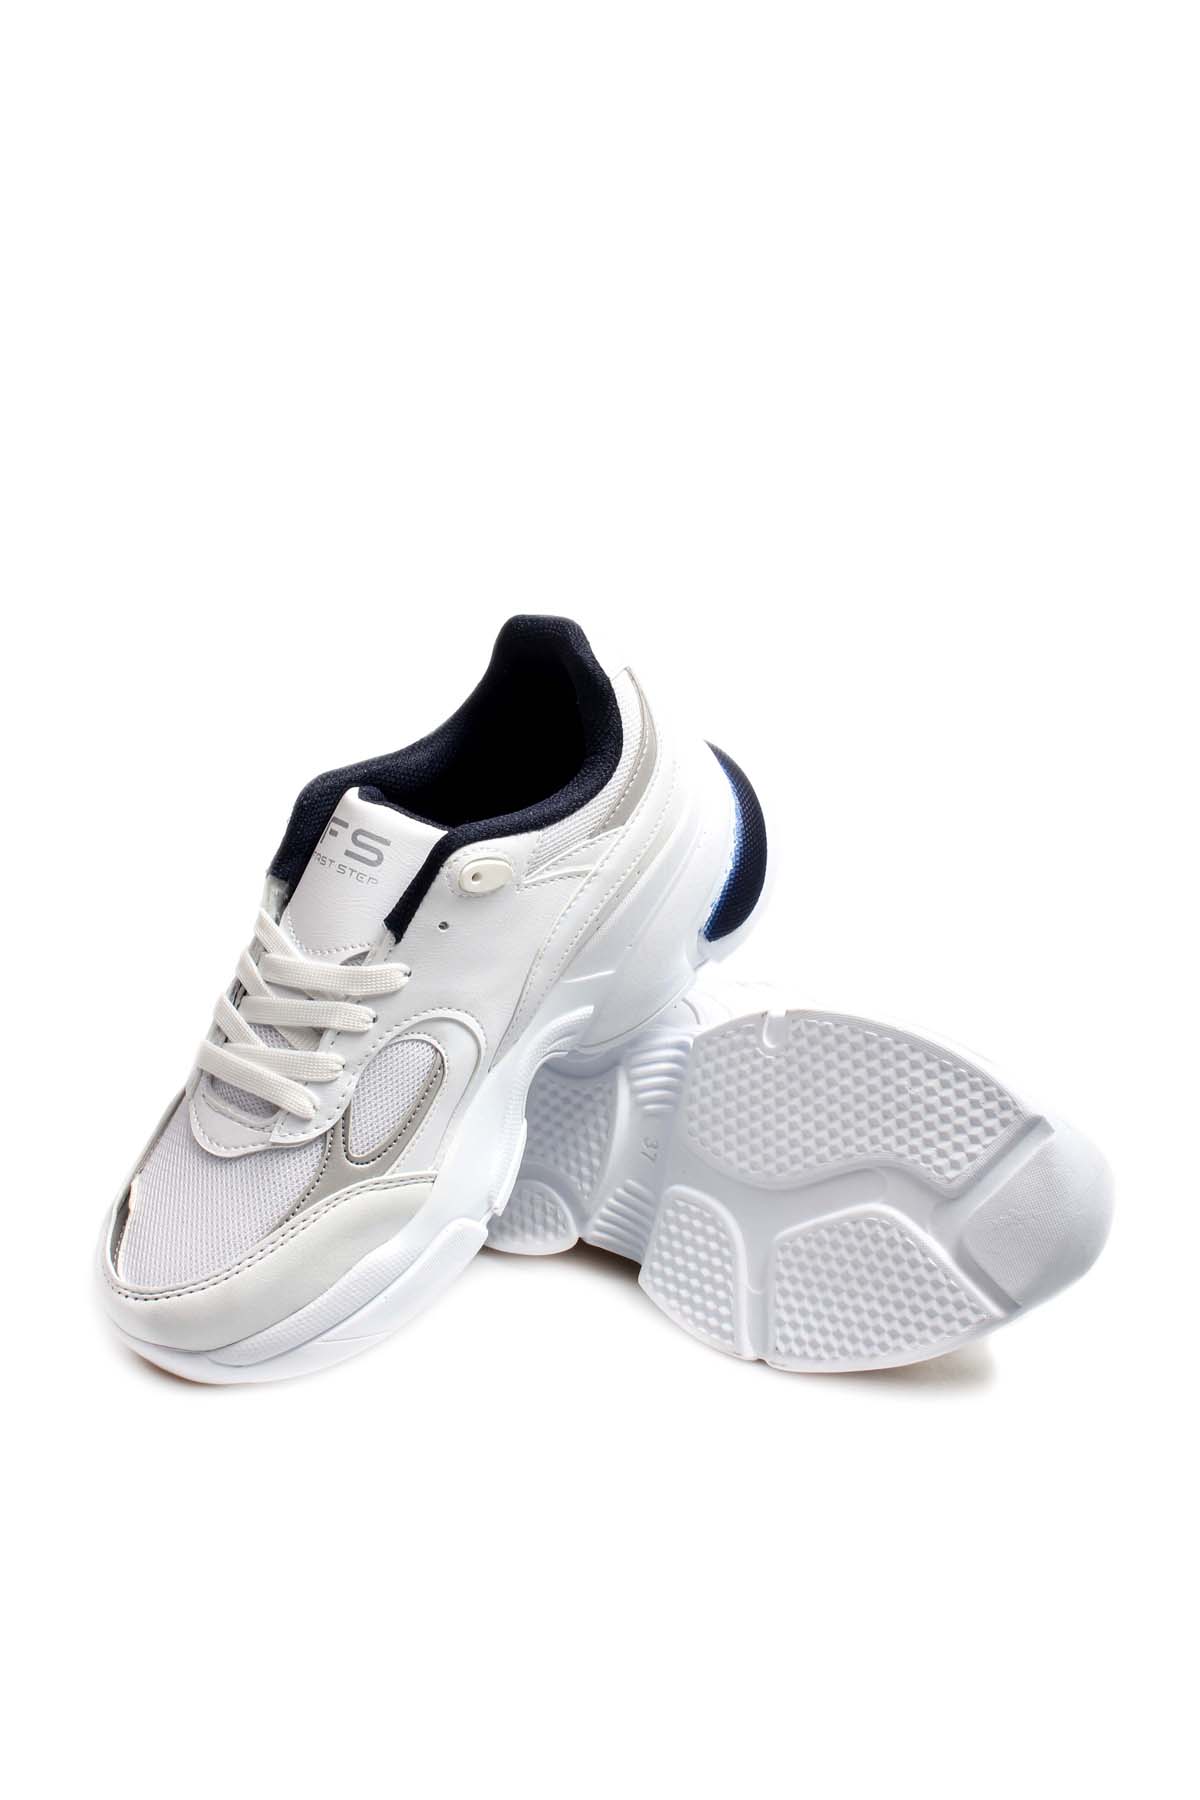 Fast Step Women Sports shoes Black 500ZA7190